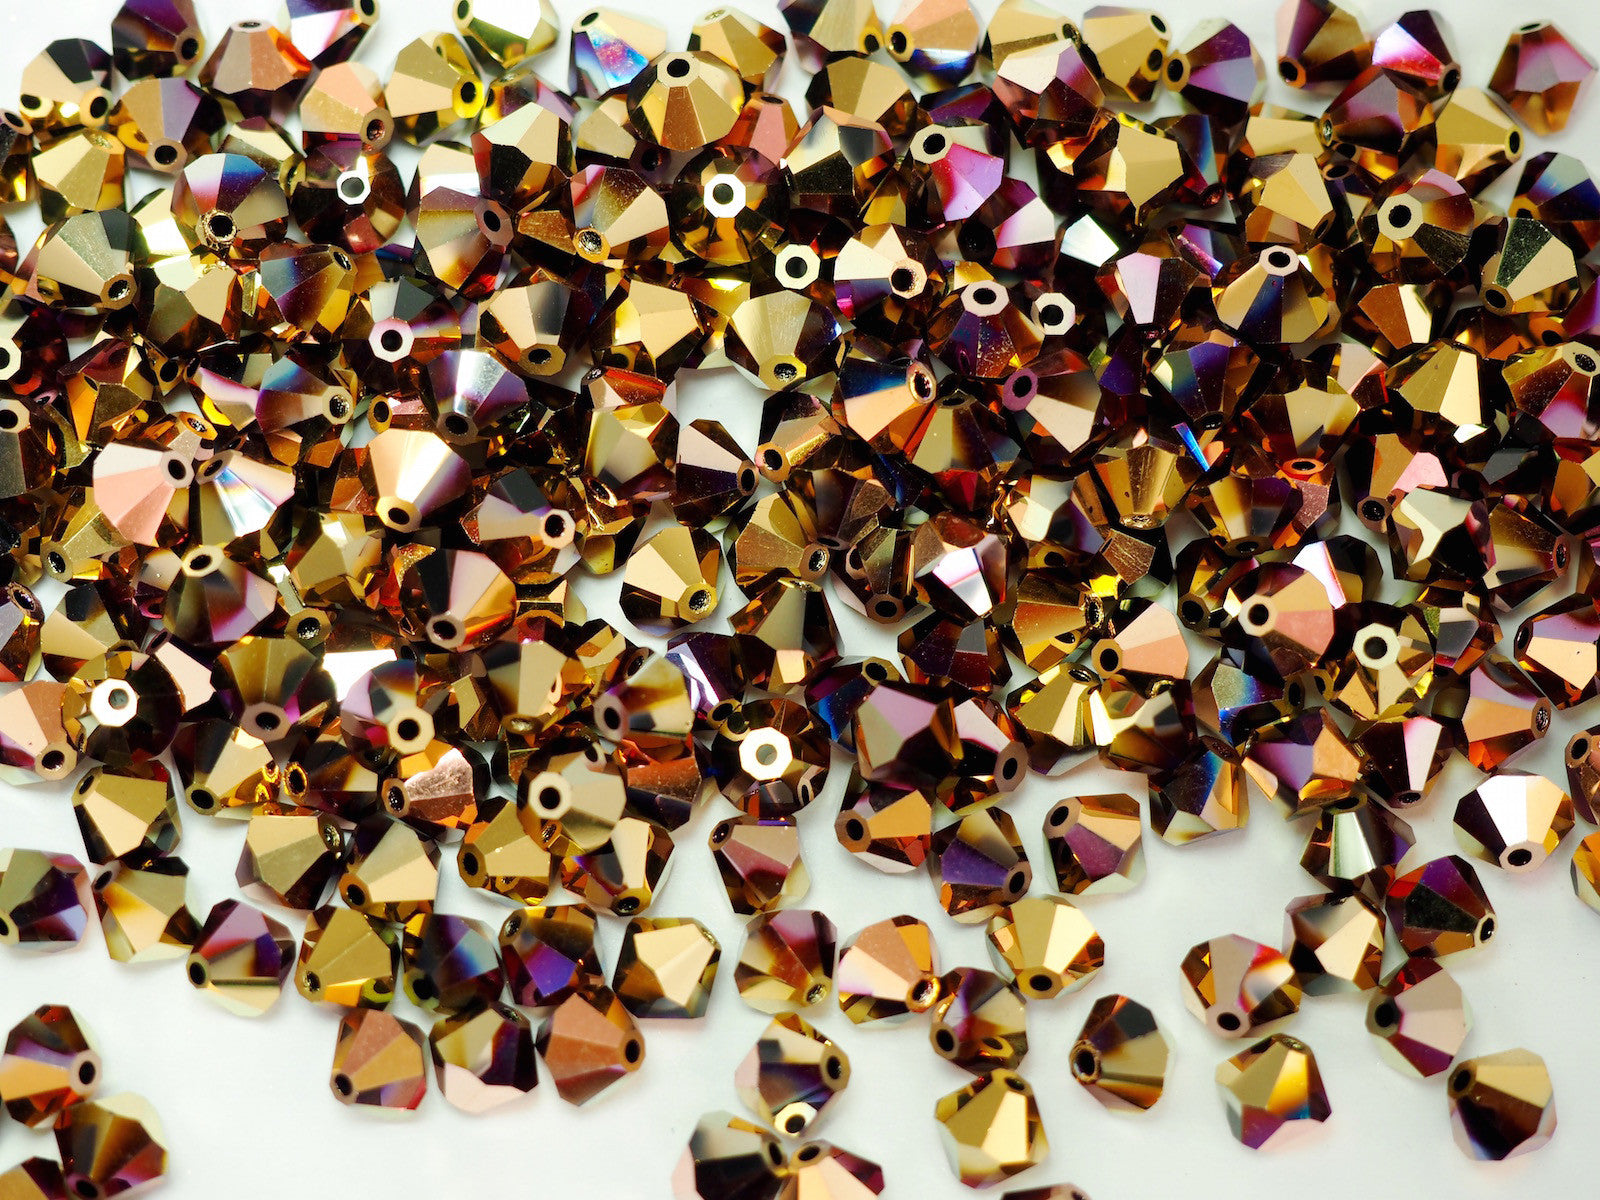 Jet California Pink (Black Aurum Copper), Czech Glass Beads, Machine Cut Bicones (MC Rondell, Diamond Shape), jet black crystals coated with multi pink gold metallic